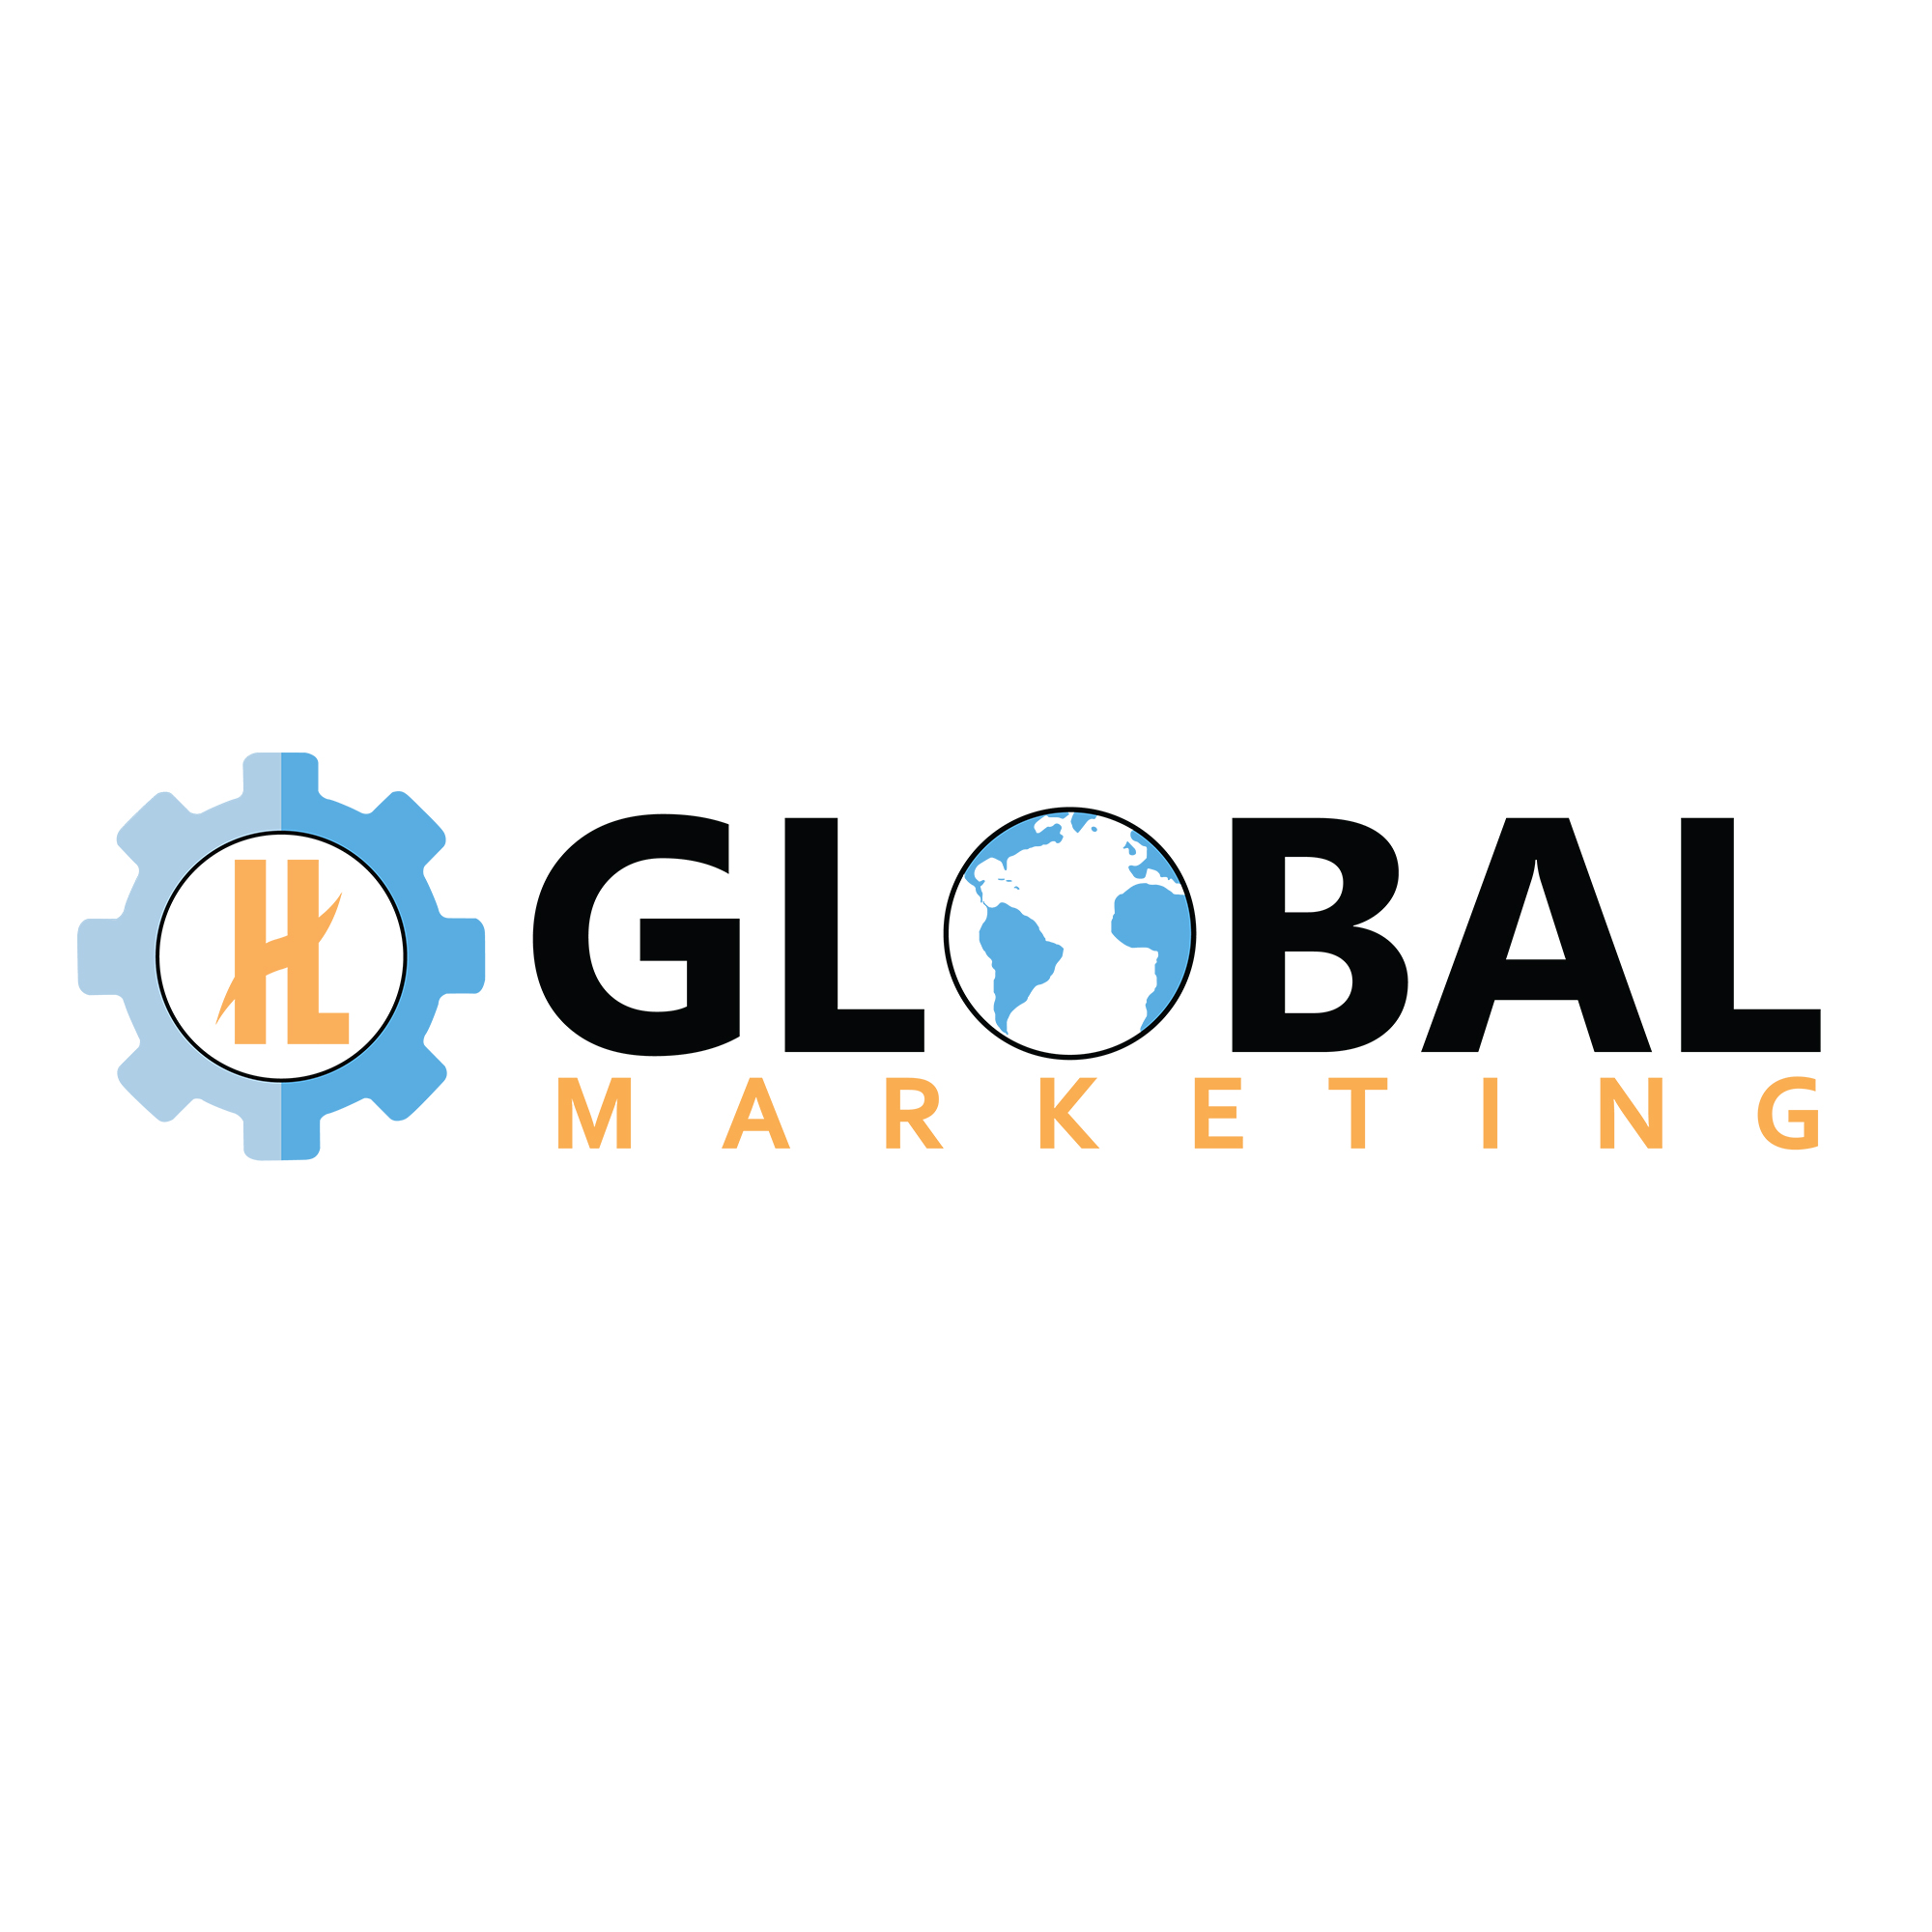 HL Global Marketing Pvt Ltd